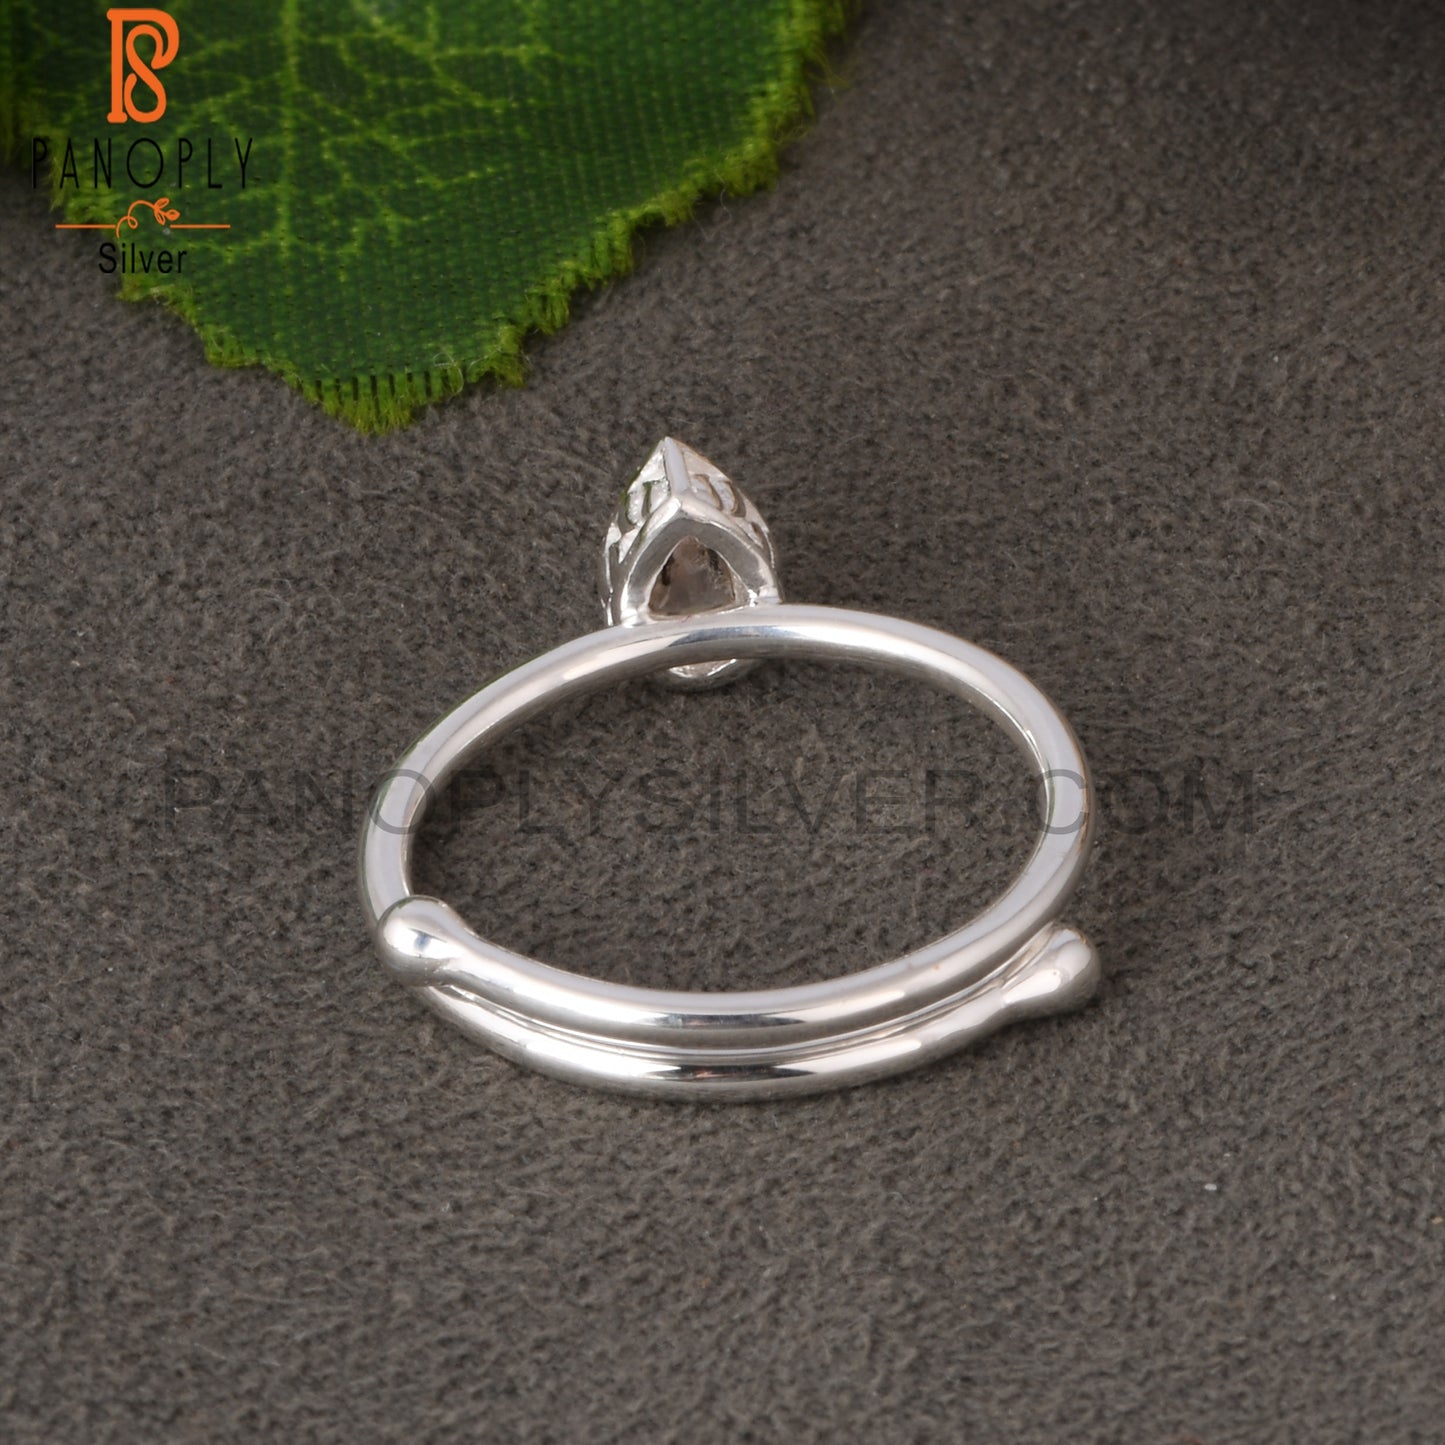 Rose Quartz Pear Shape 925 Sterling Silver Ring